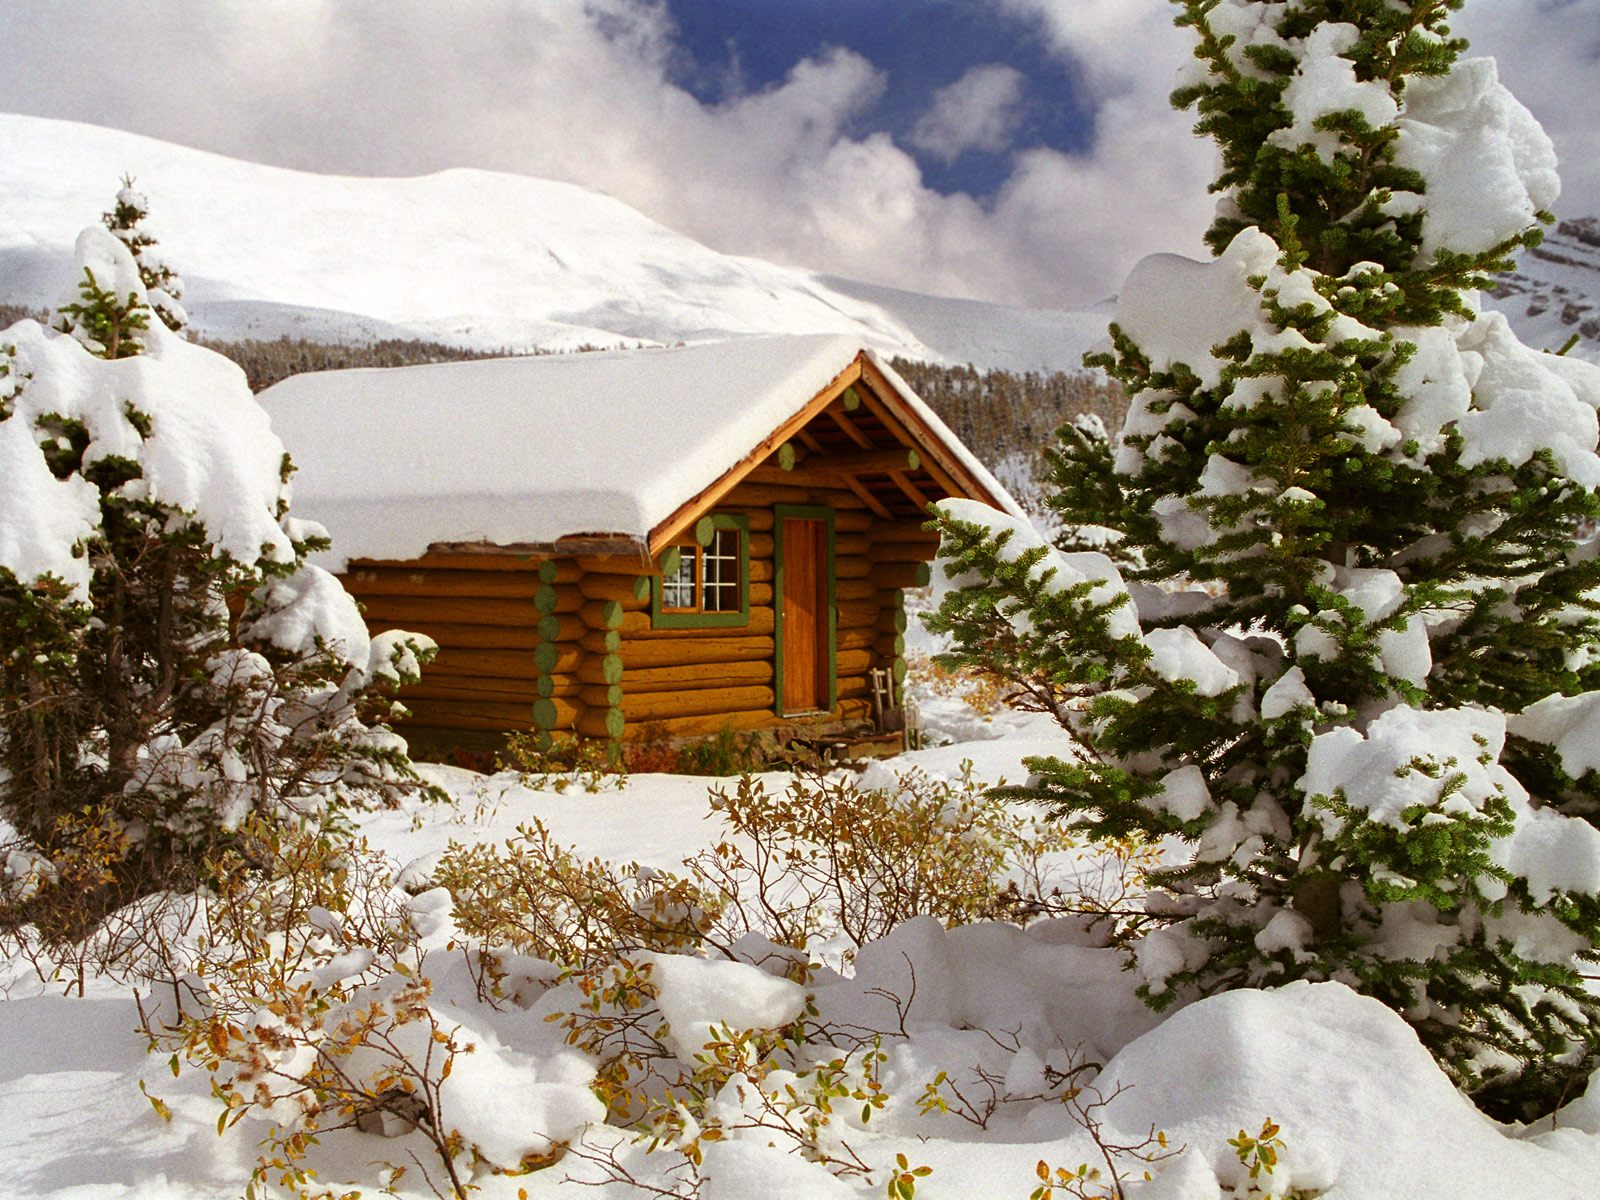 Boże Narodzenie - Cozy Log Cabin, Mount Assiniboine, British Columbia, Canada.jpg